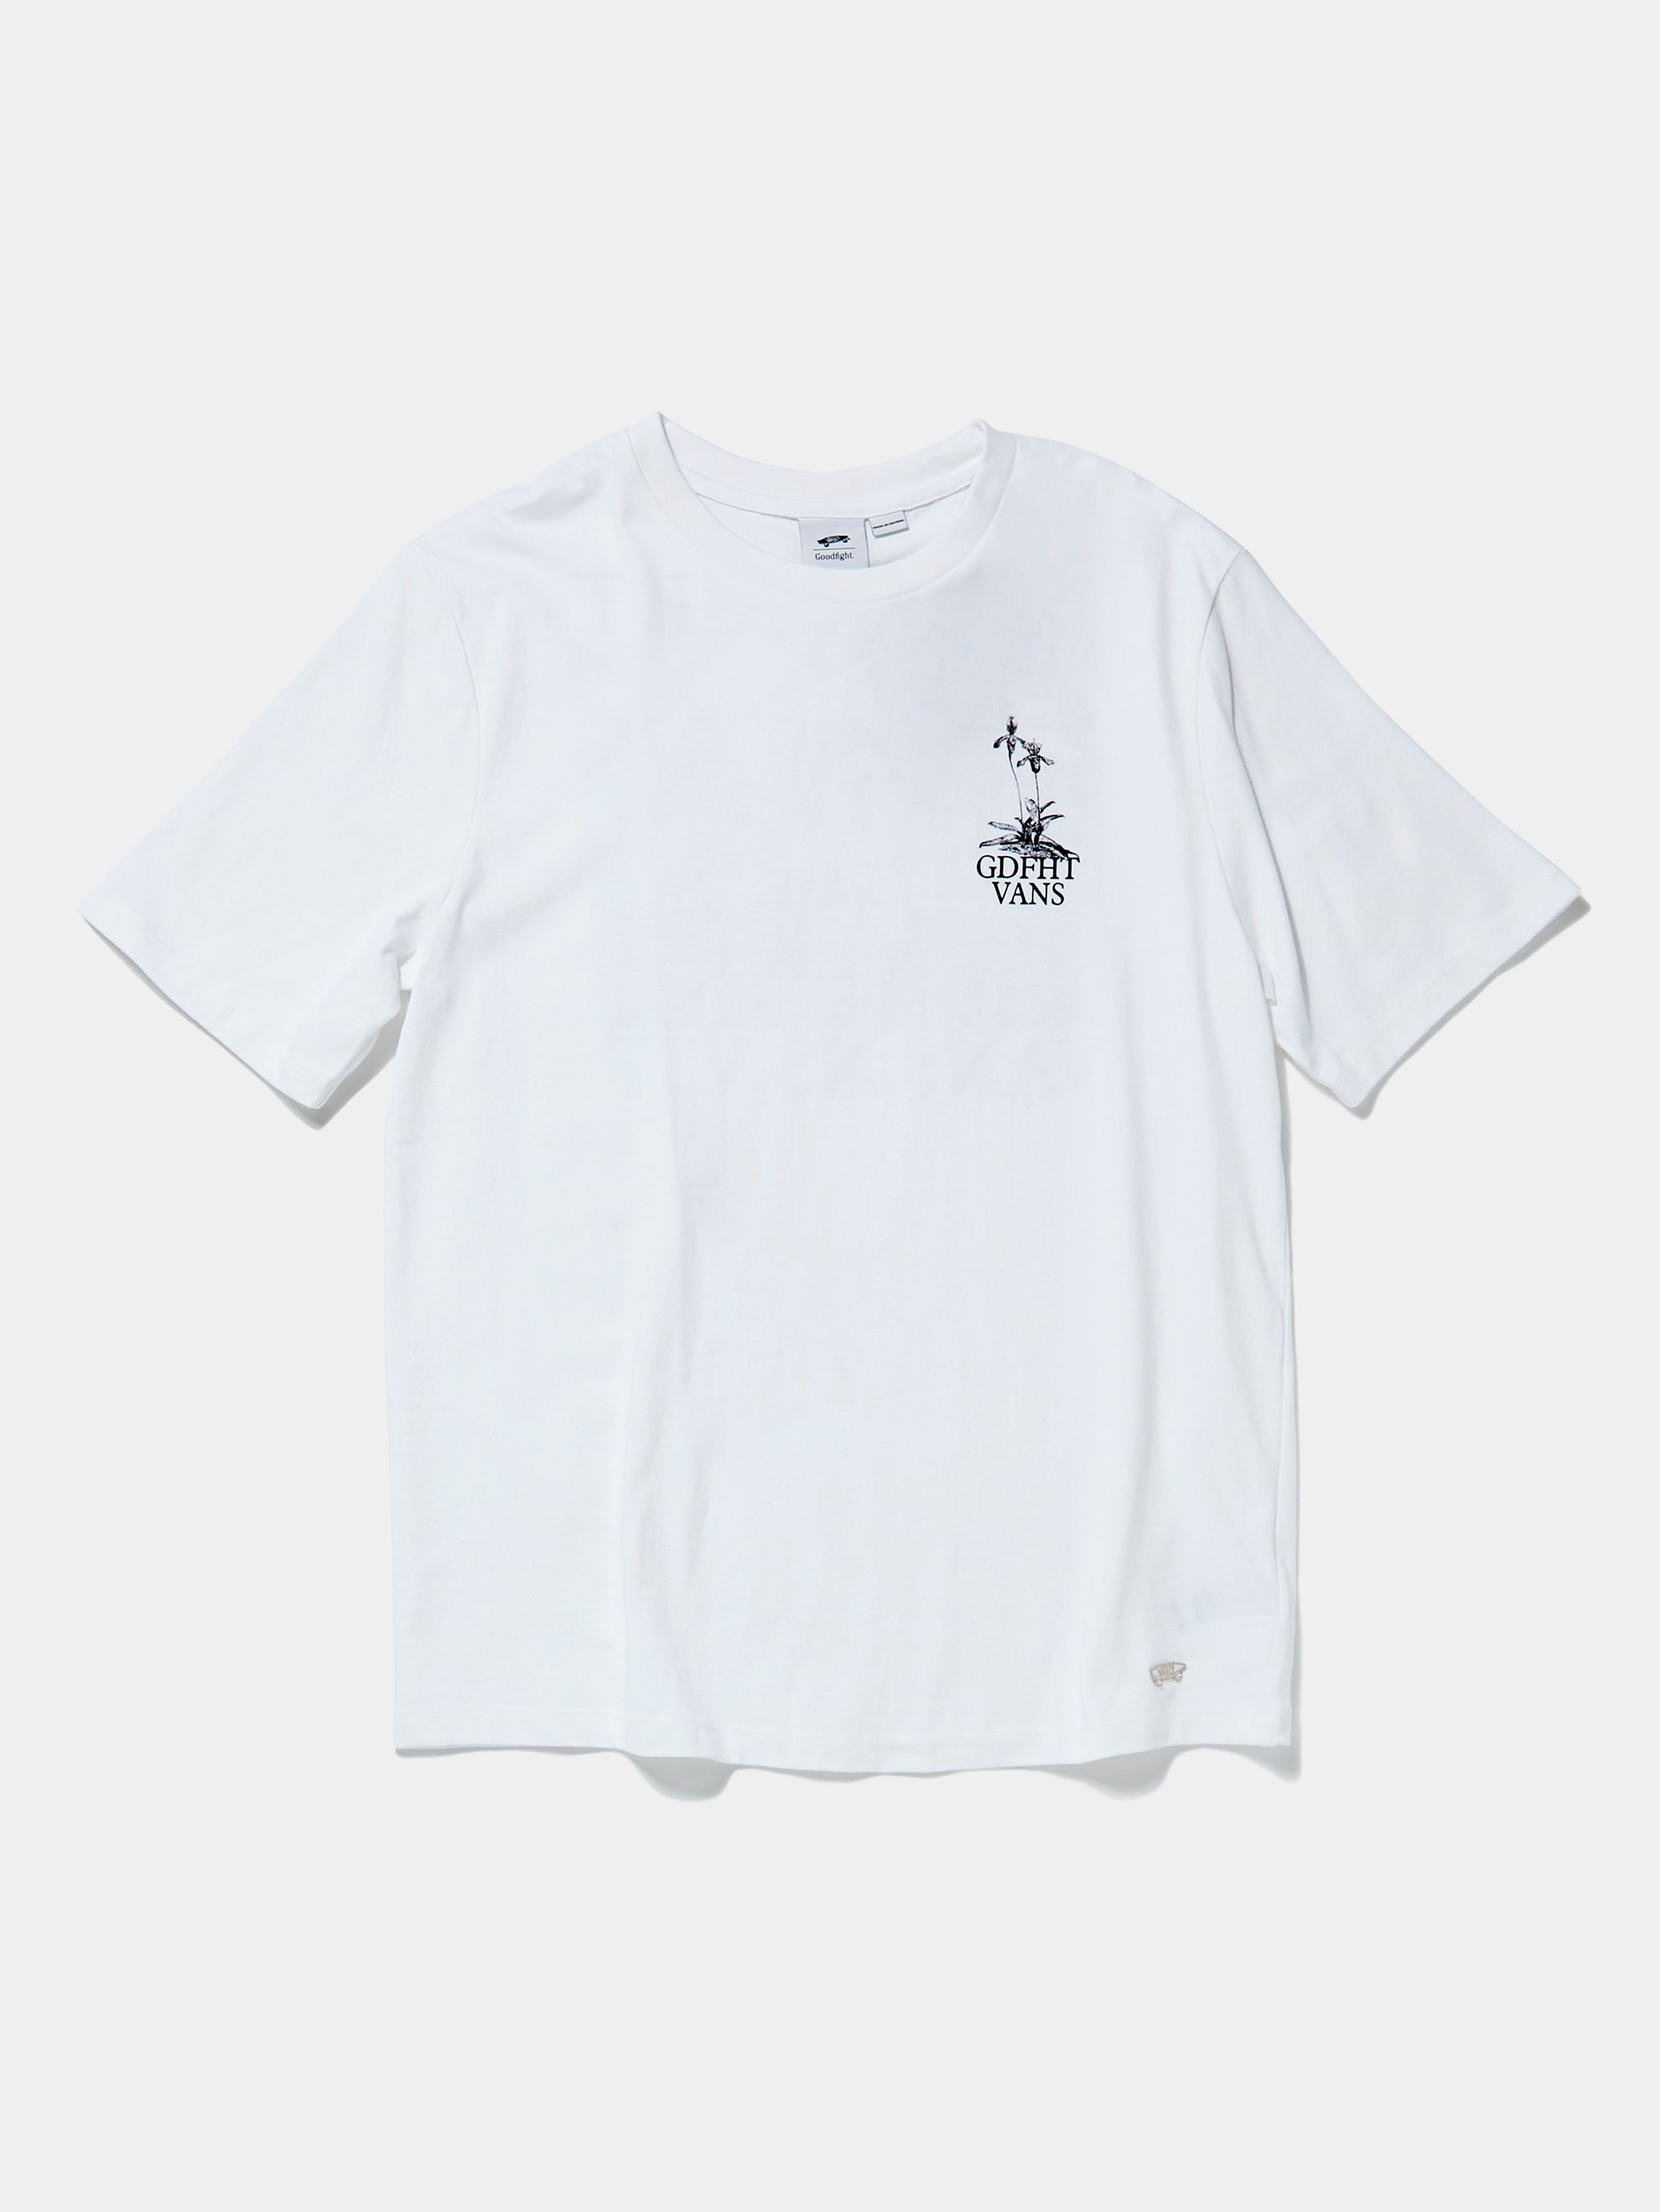 GOODFIGHT x VANS SS T-Shirt (White)